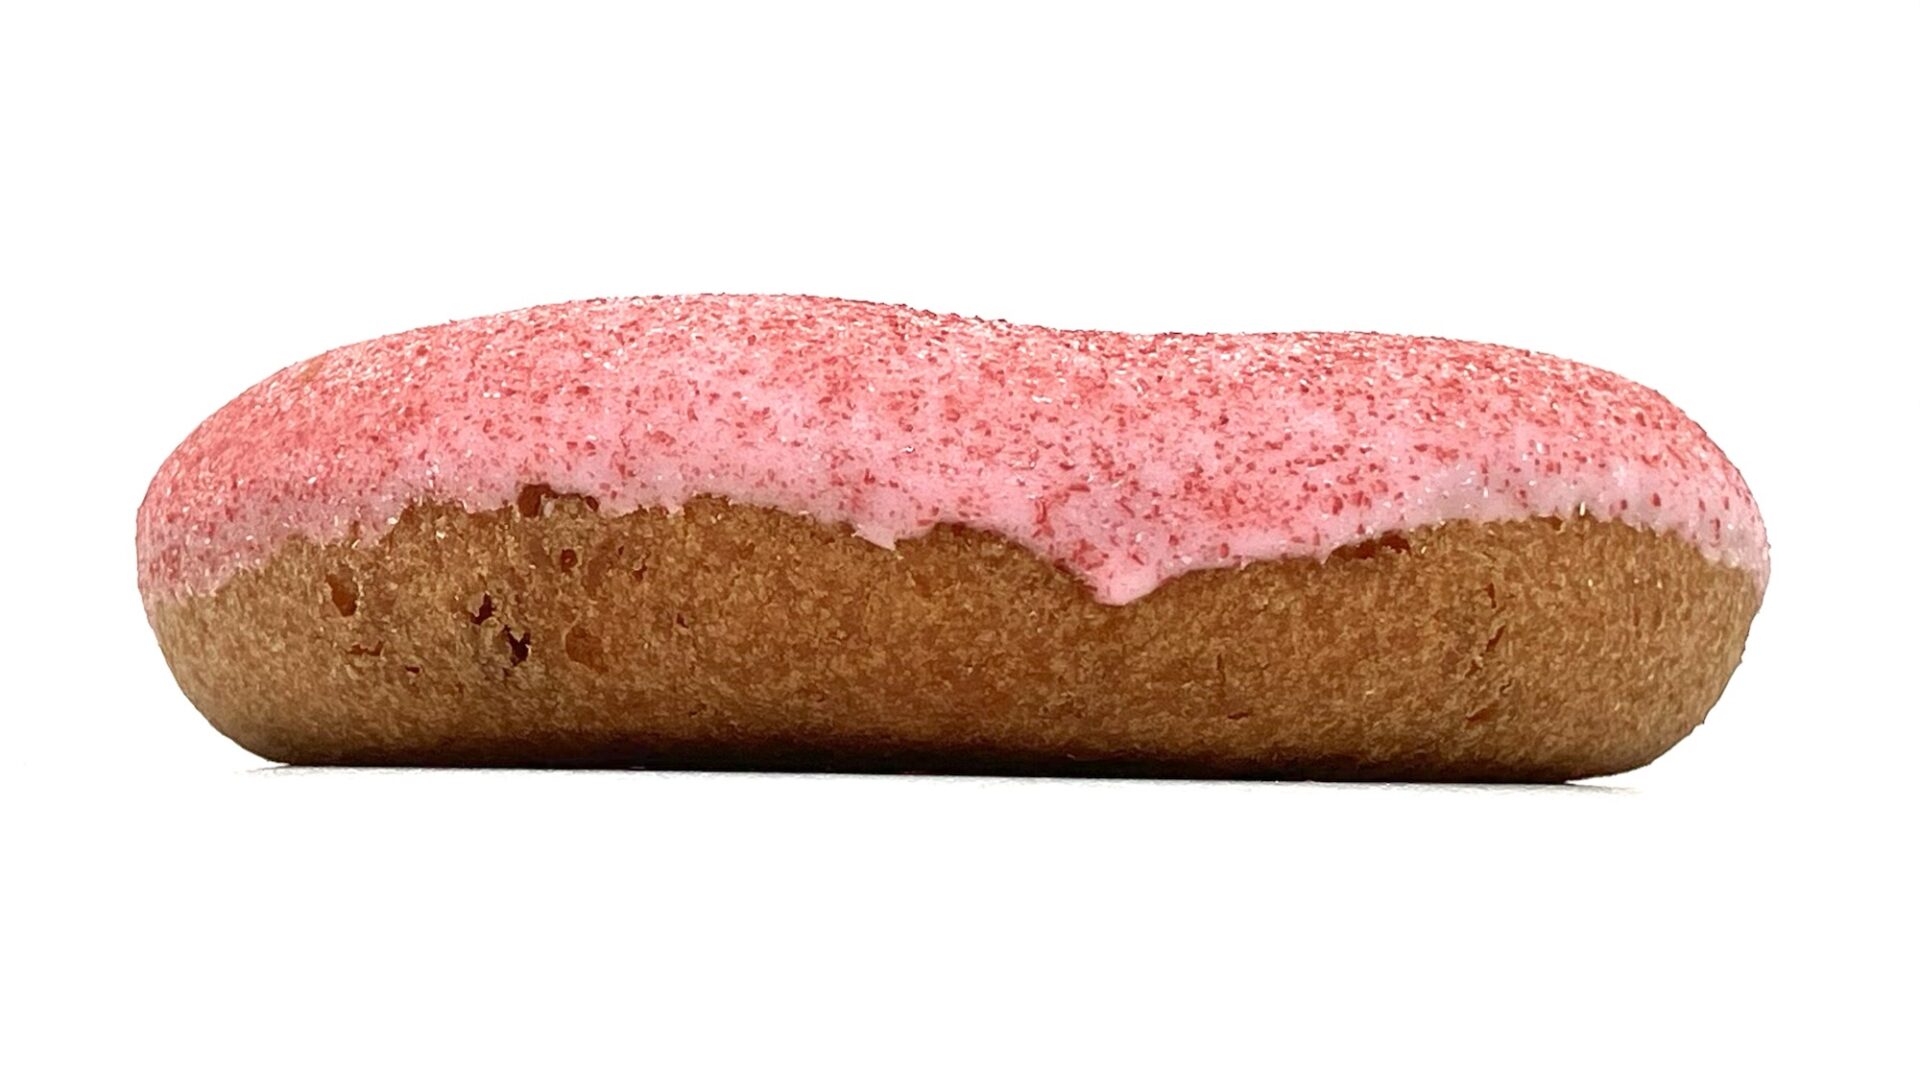 seveneleven-donuts-strawberry-coating-side